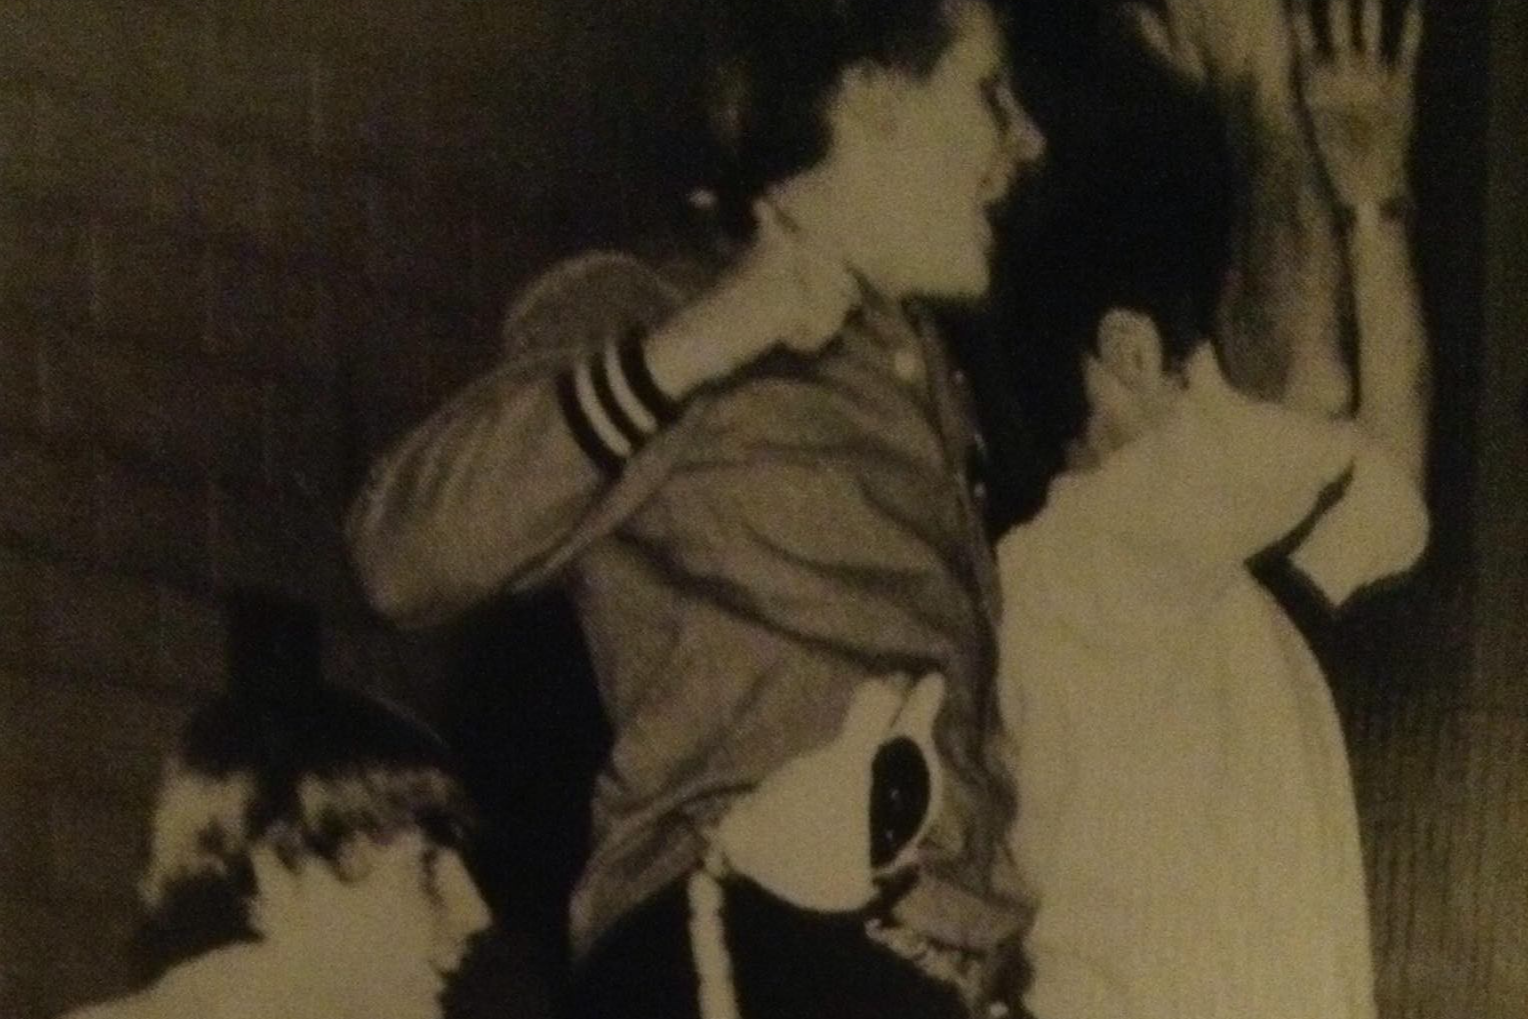 Vintage photo of a school wrestler